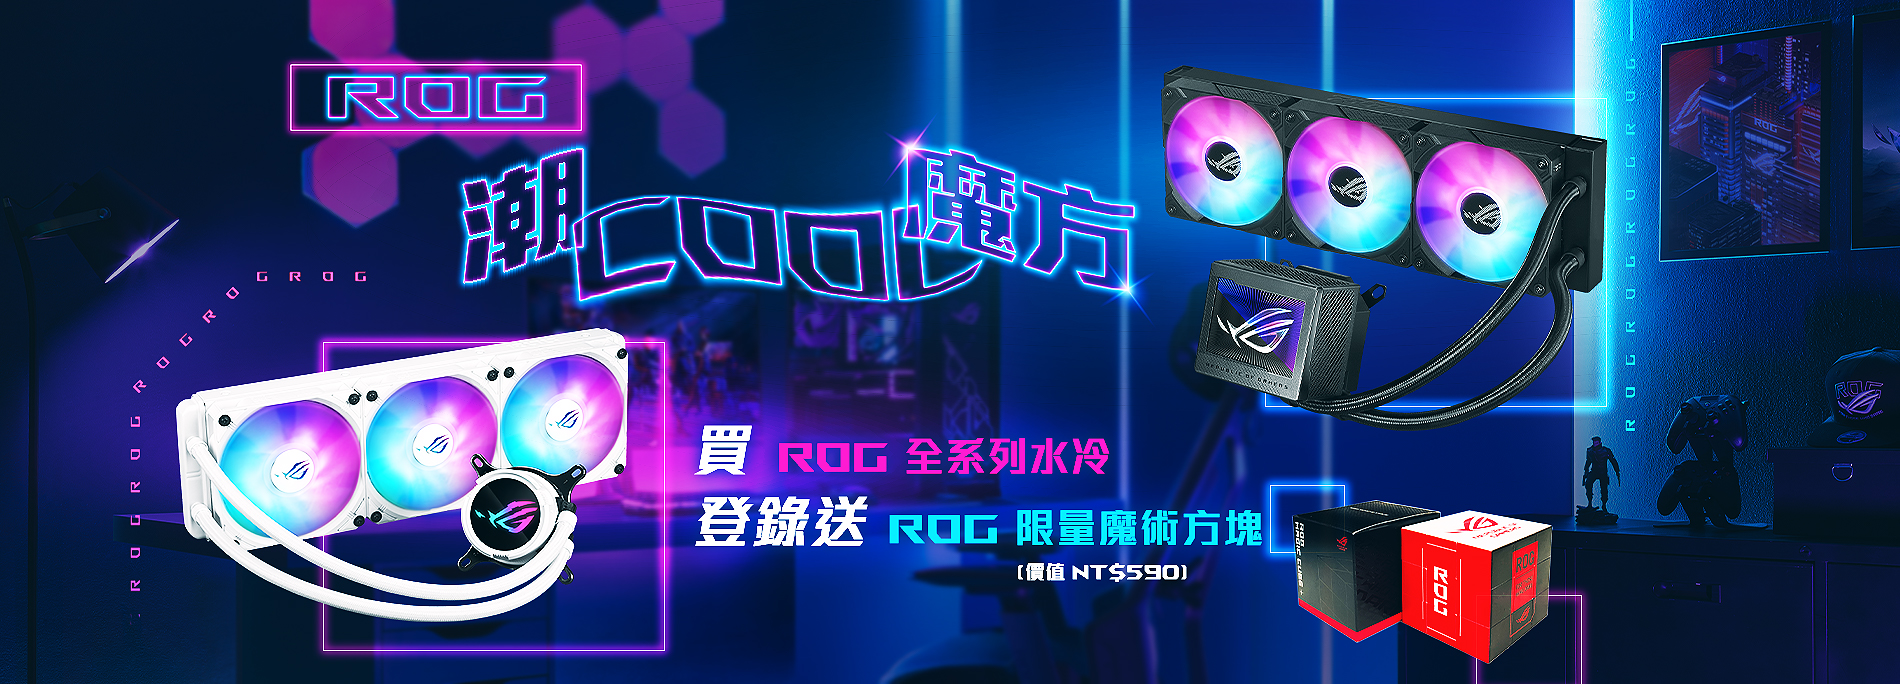 【ROG潮Cool魔方】購買ROG全系列水冷送ROG限量魔術方塊(價值$590)